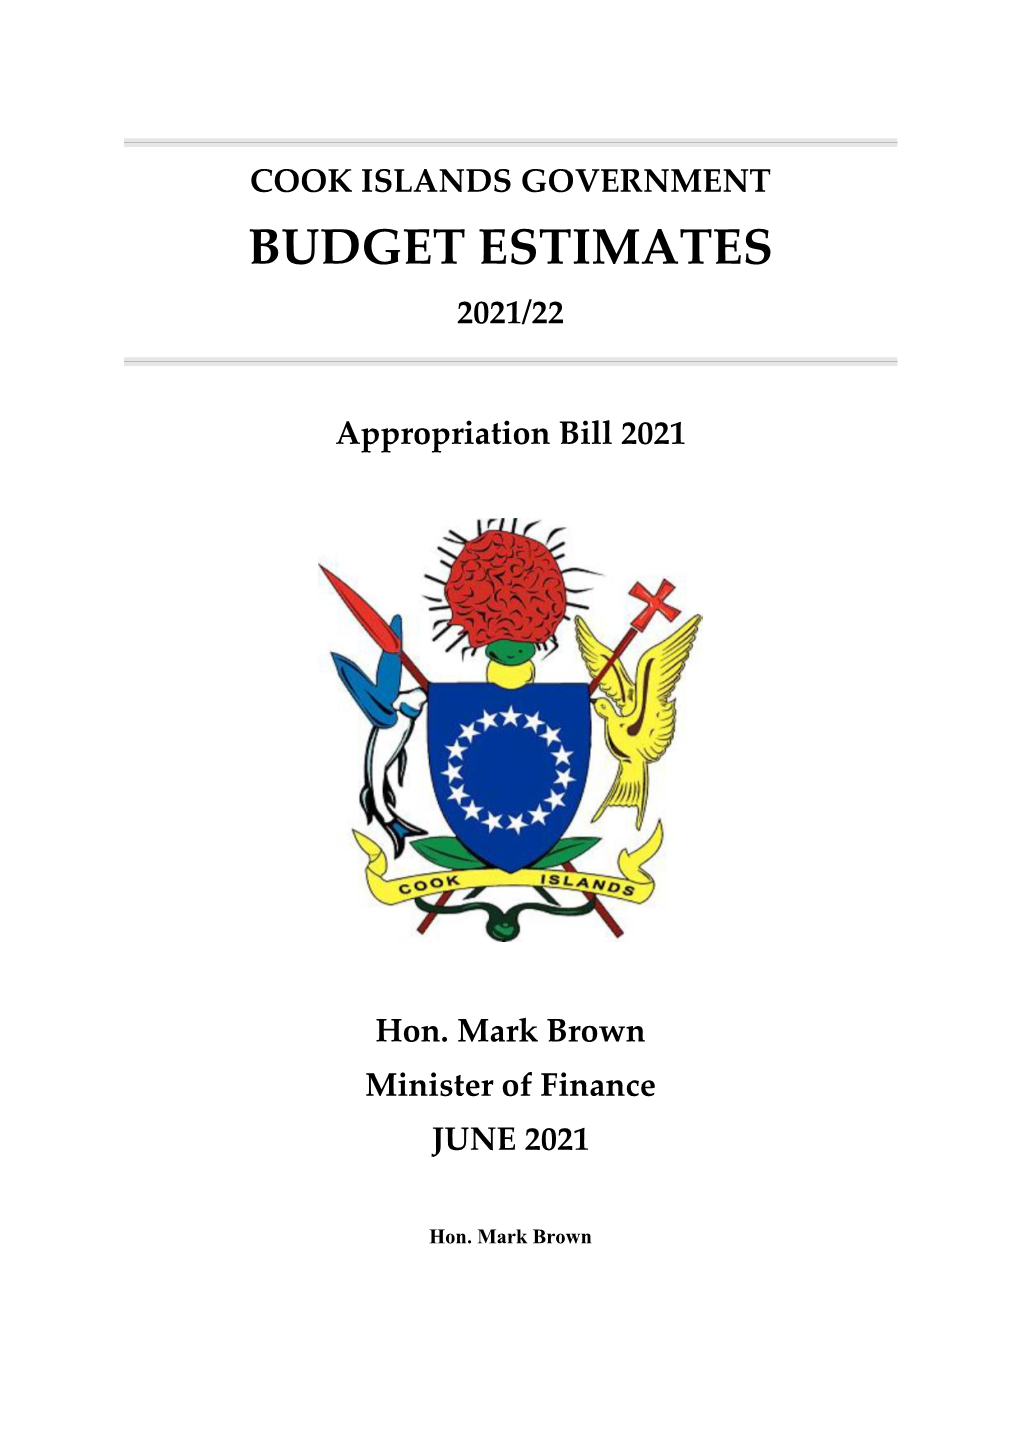 Cook Islands Government Budget Estimates 2021/22